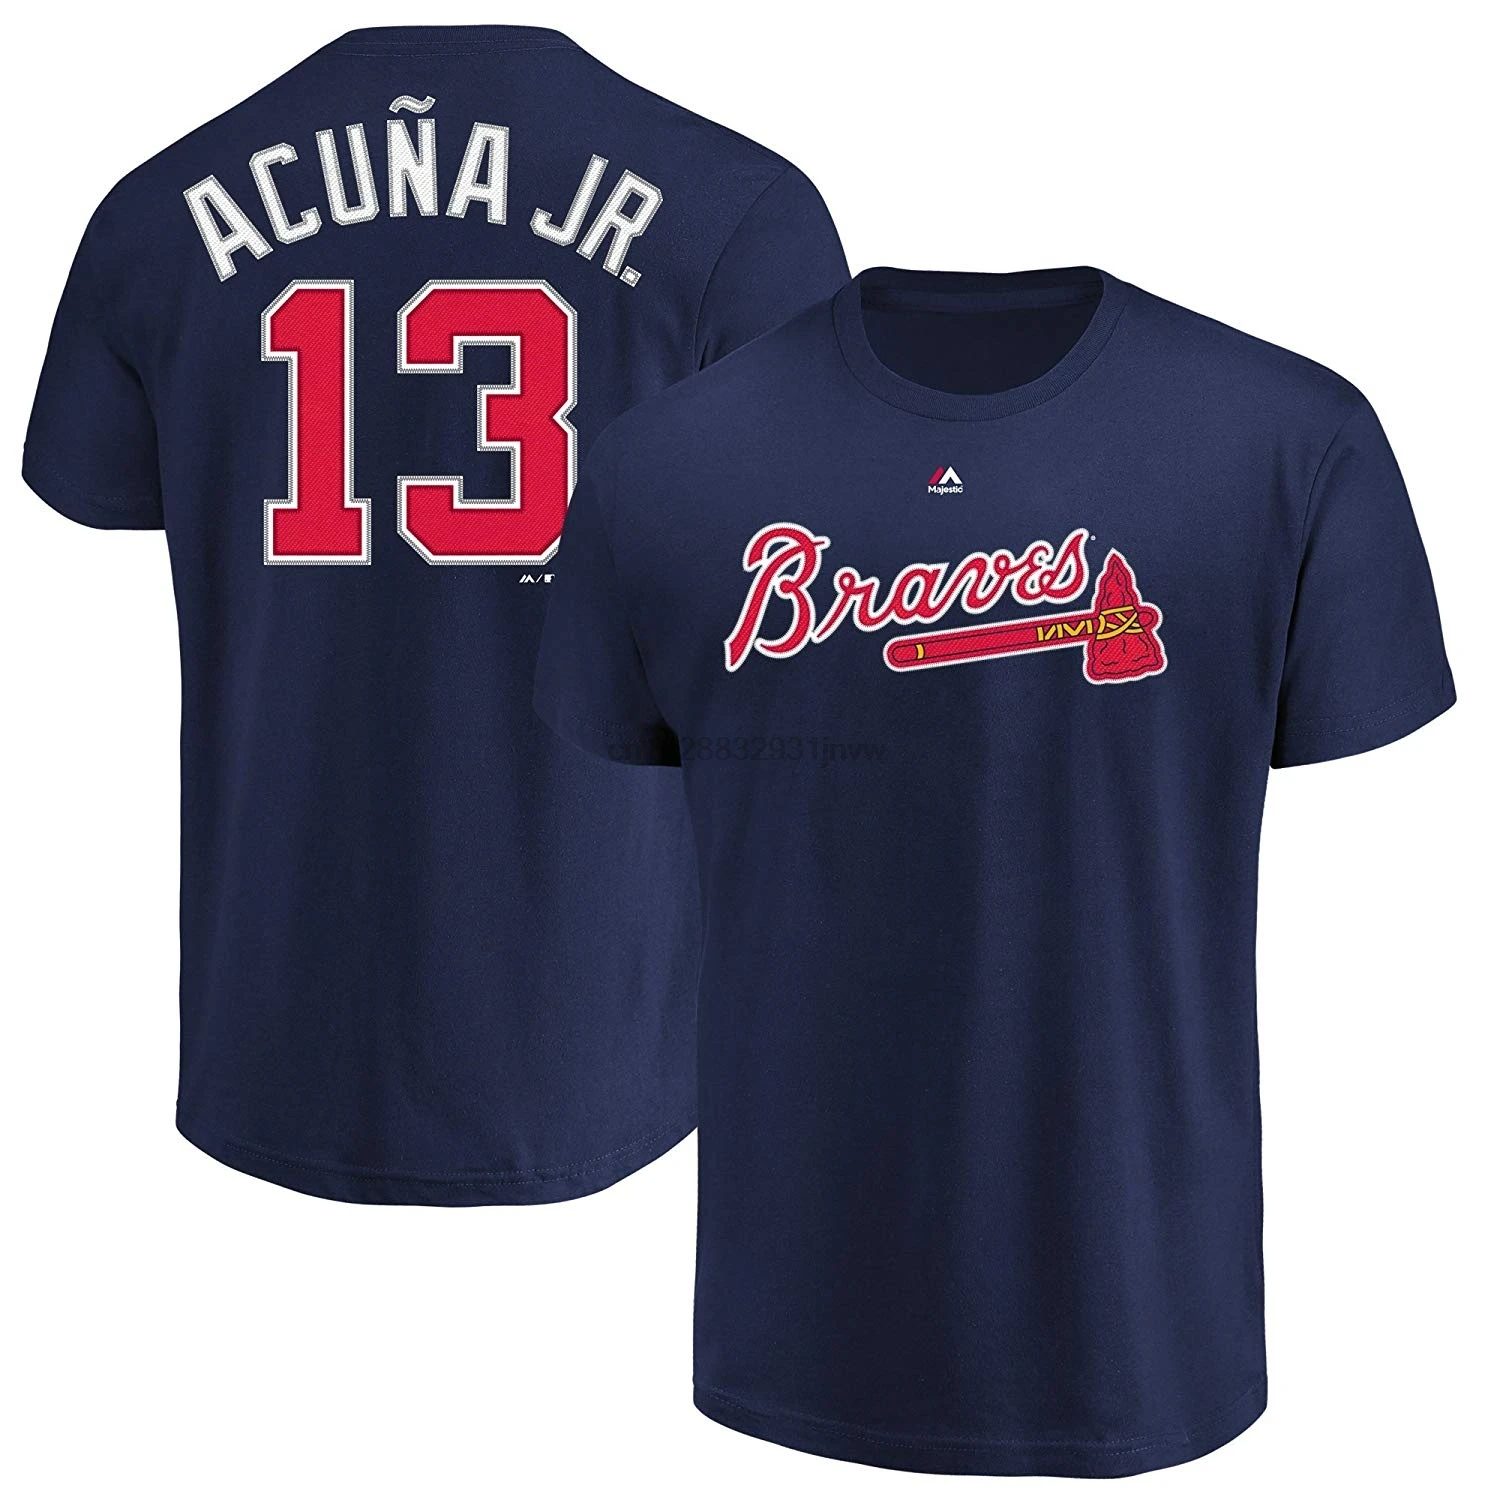 

Ronald Acuna Jr Atlanta #13 Braves Youth Player Name Number T-Shirt Navy